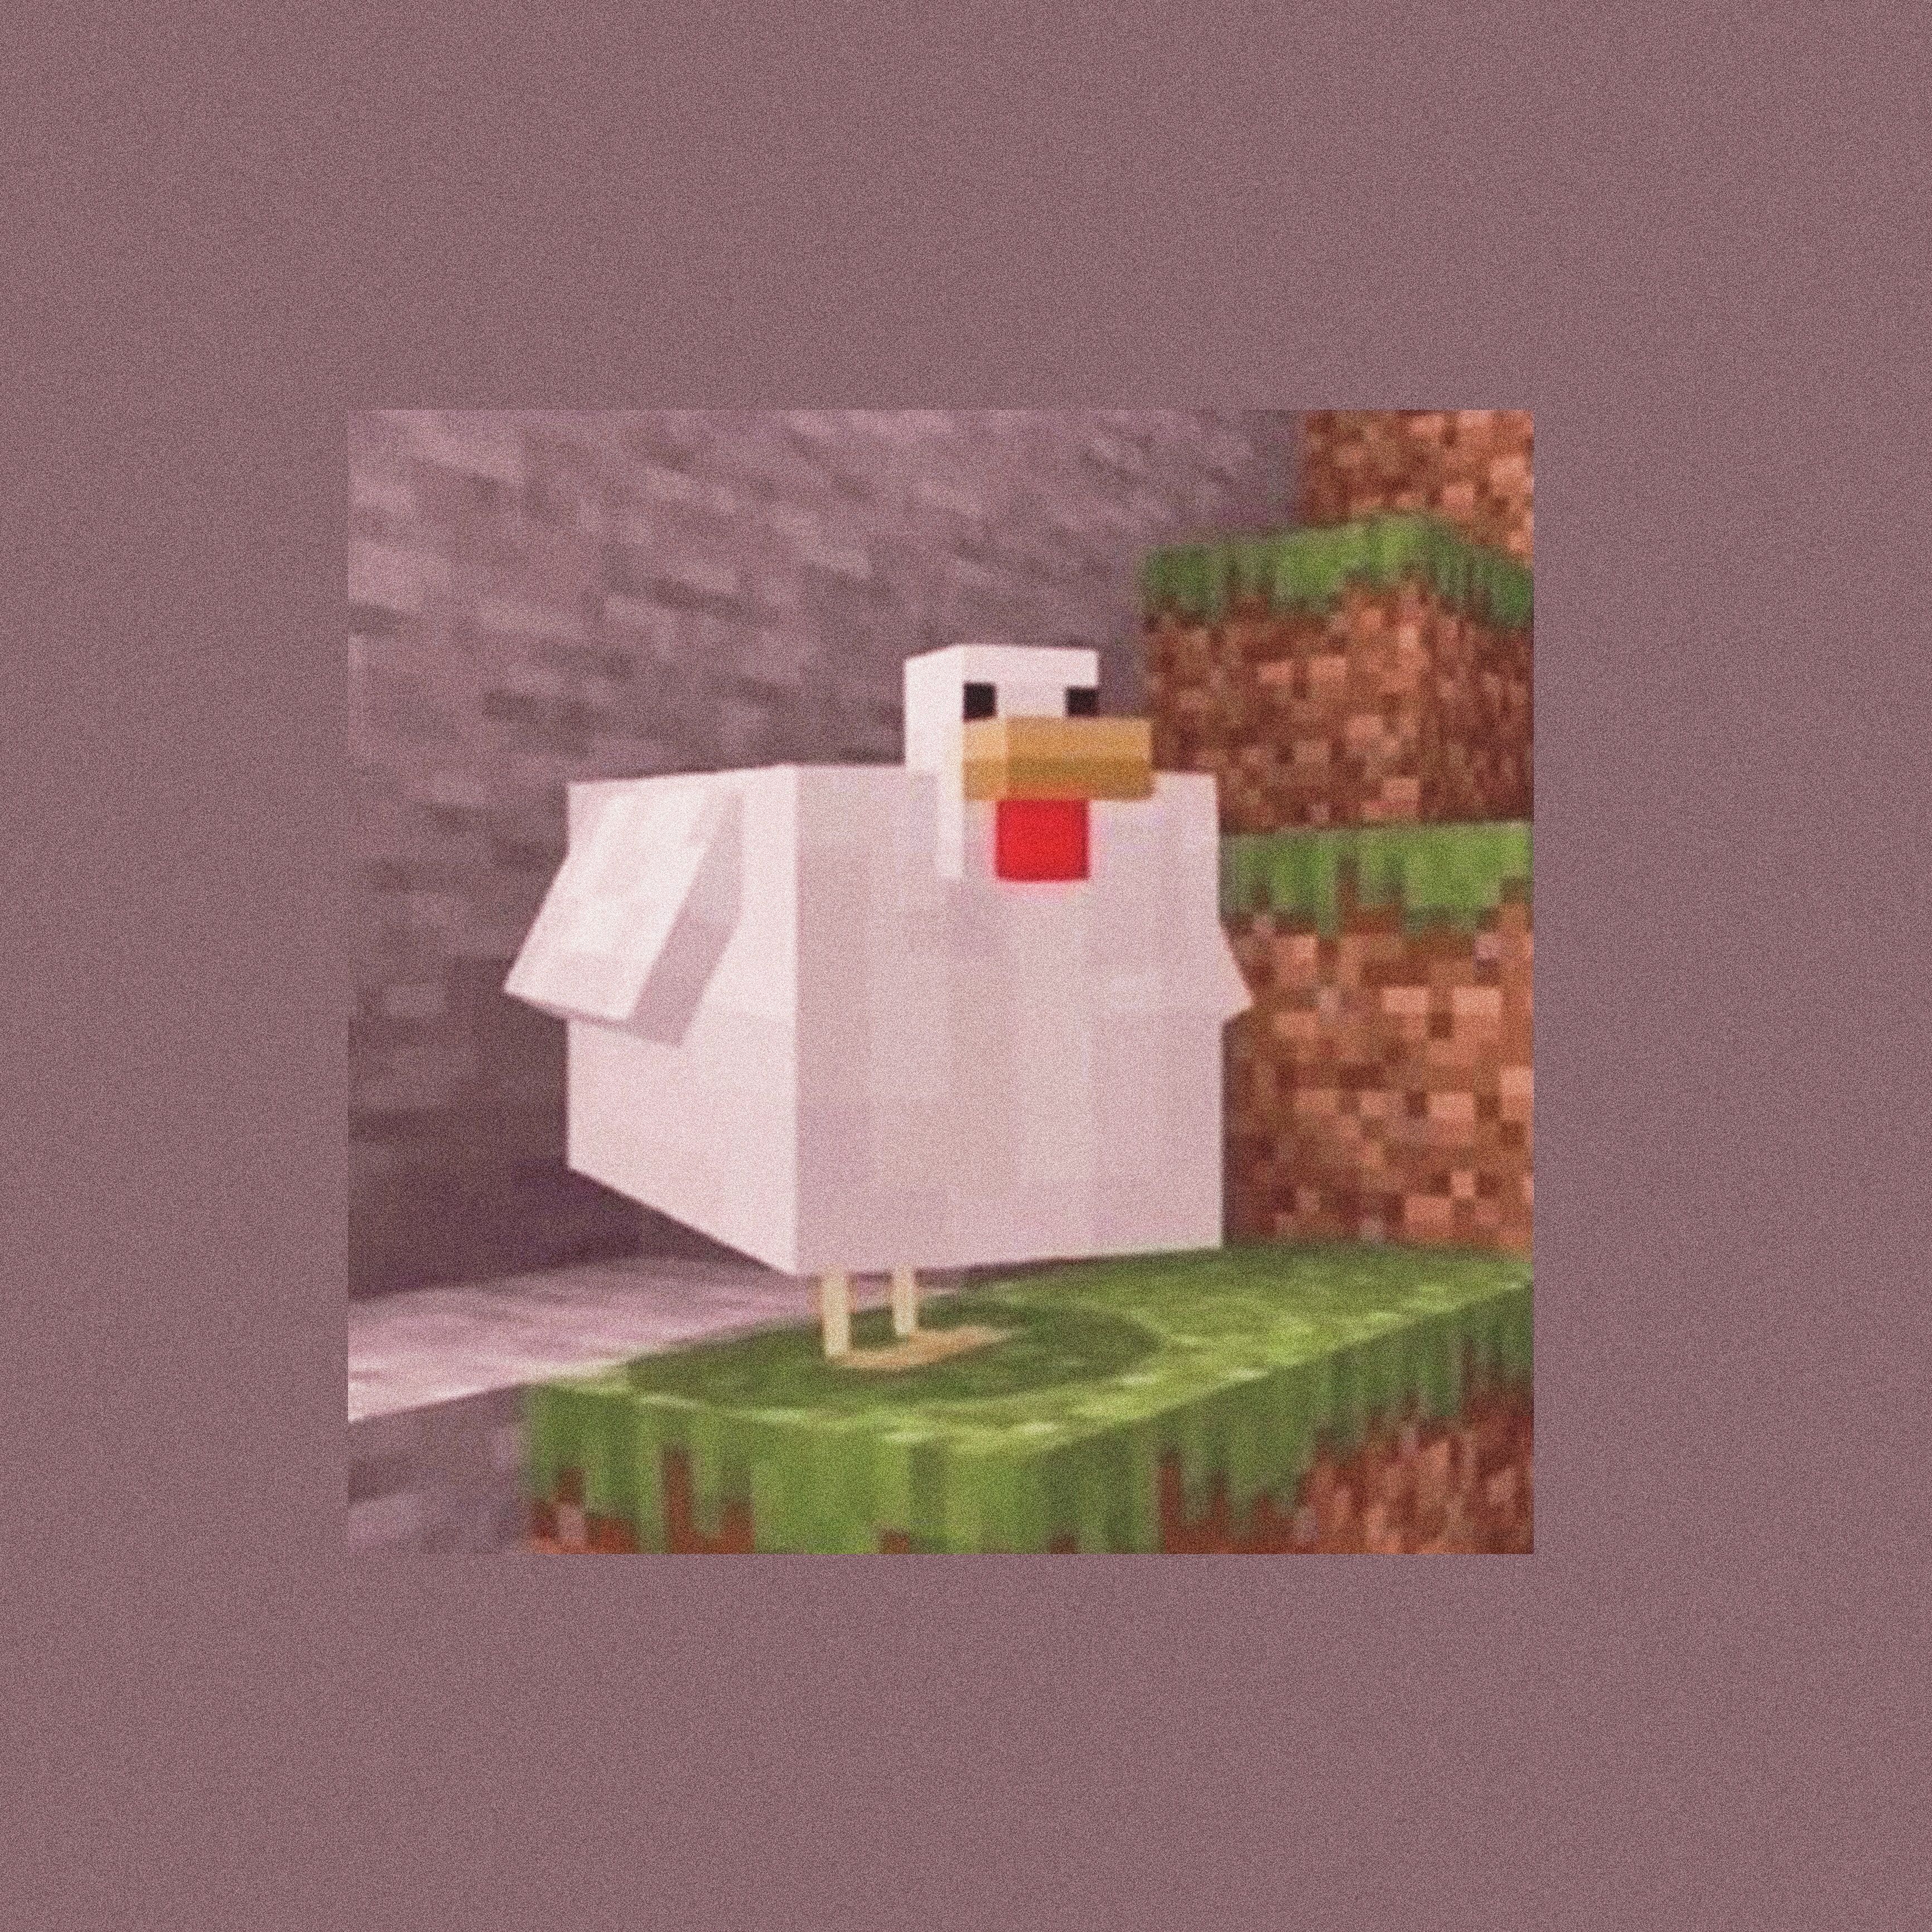 A minecraft chicken with feathers and beak - Minecraft